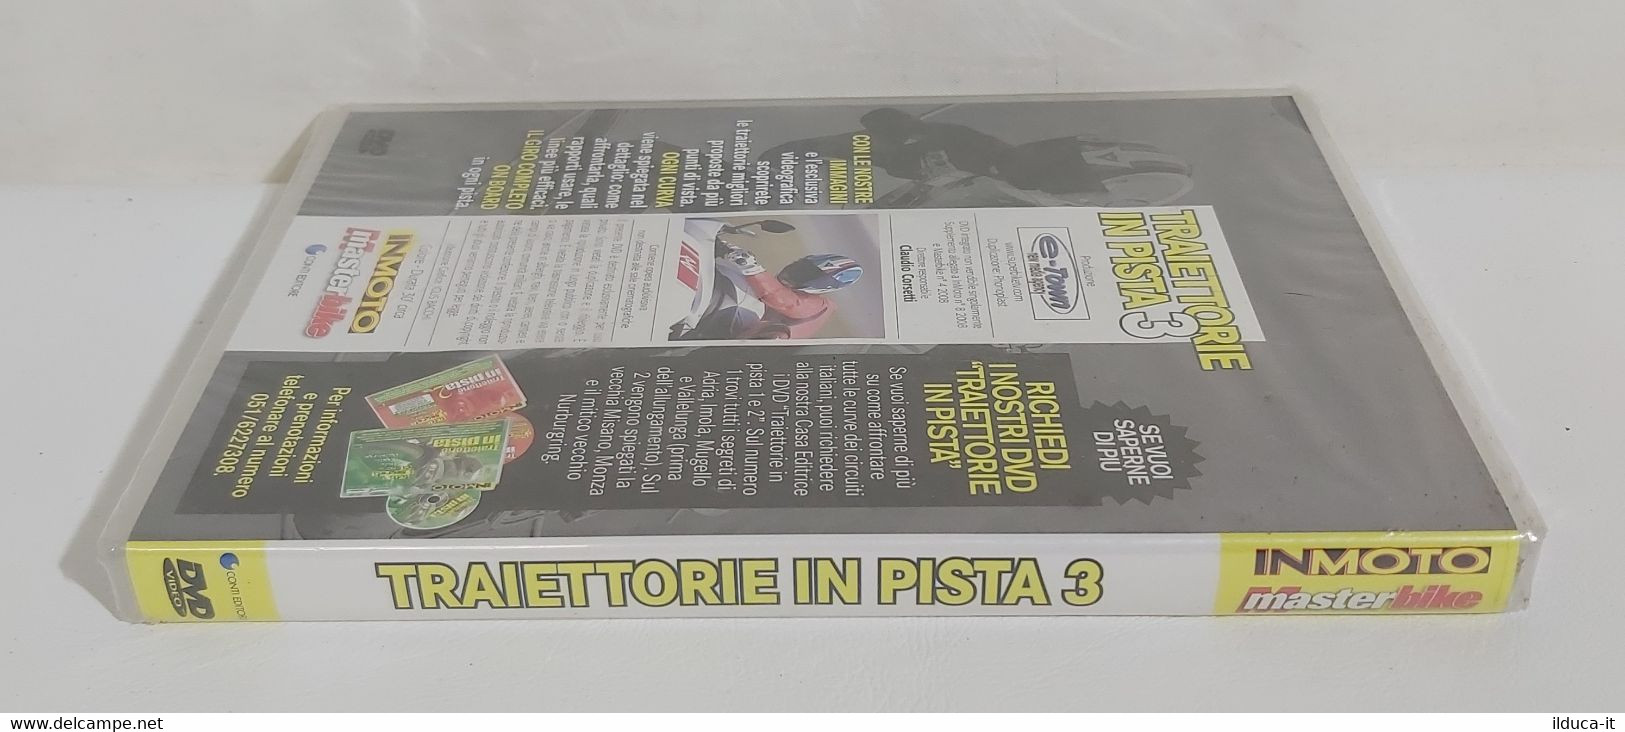 I104056 DVD - Traiettorie In Pista 3 - In Moto / Masterbike - Sigillato - Sport